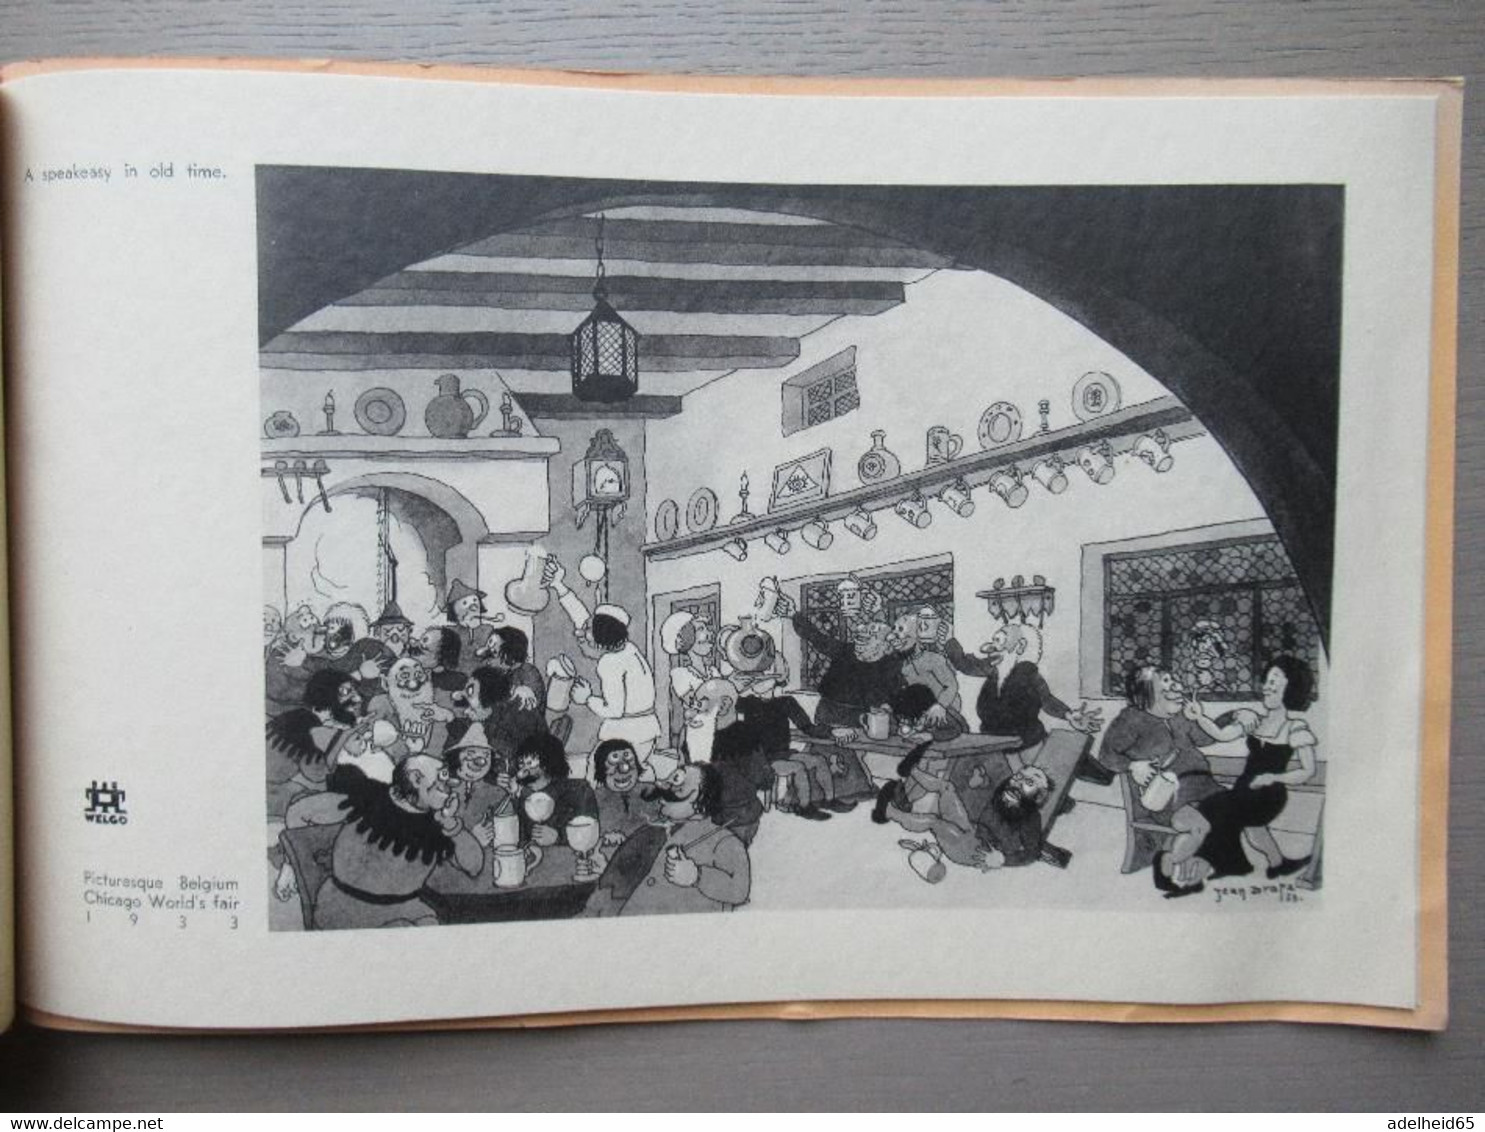 Old Belgium (cartoons) as seen by Jean Dratz Chicago world Fair 1933 Picturesque Belgium